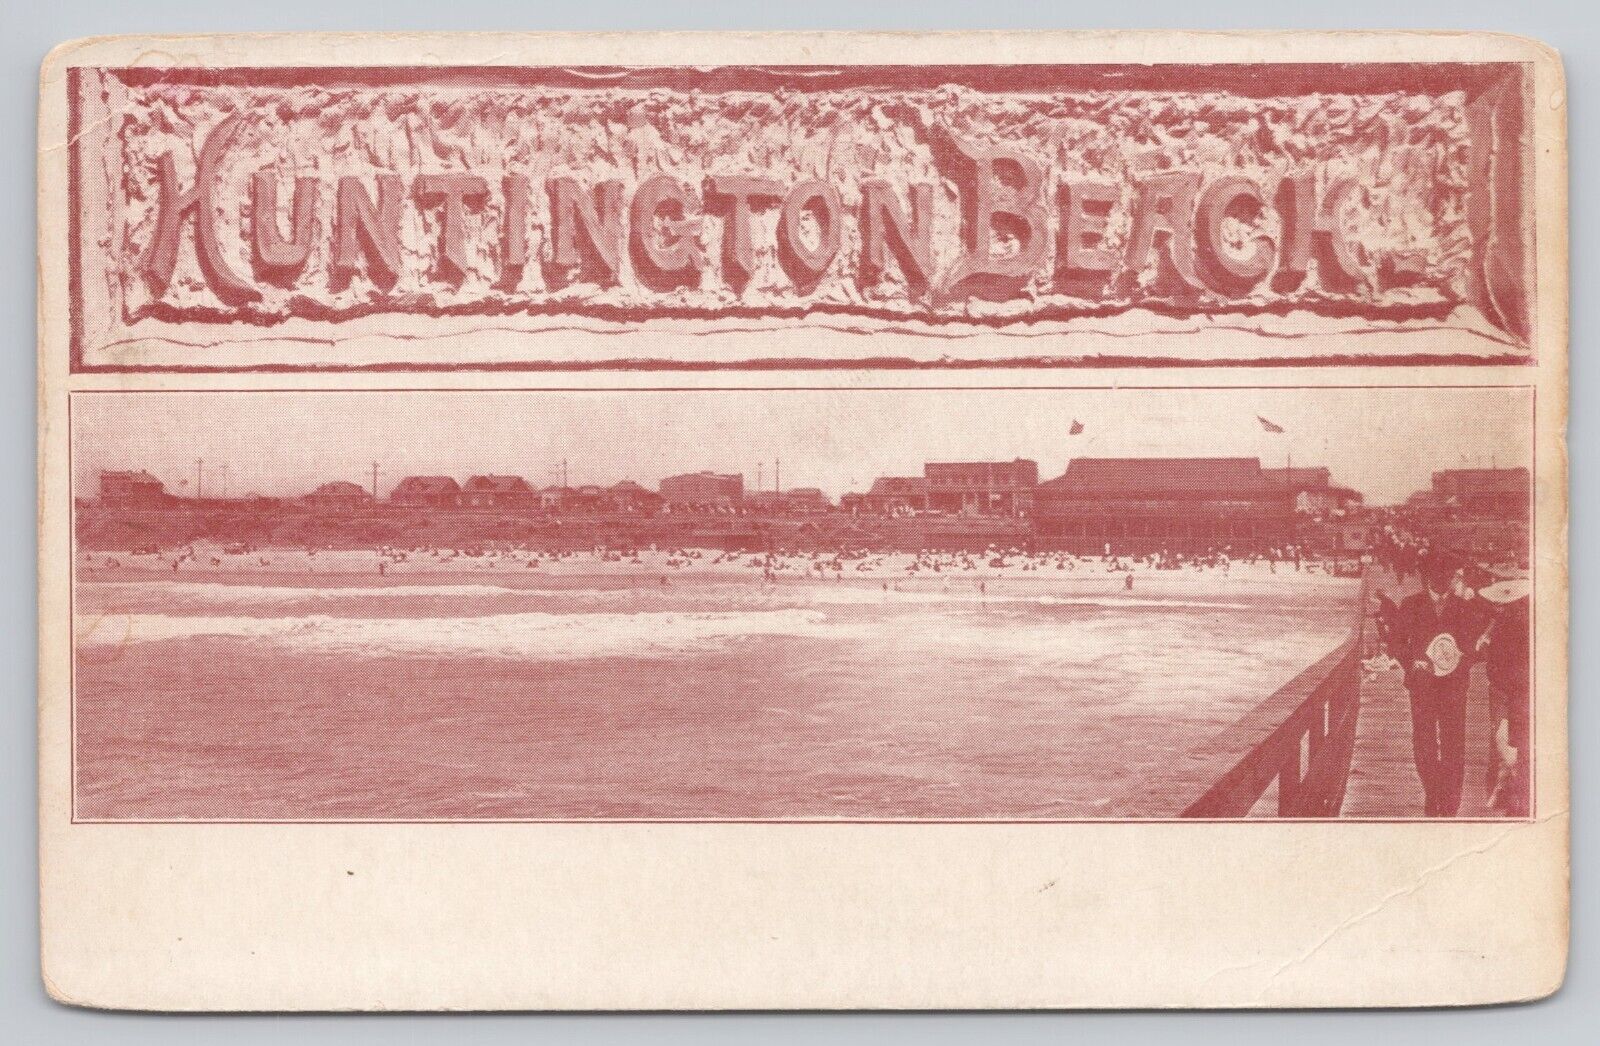 Huntington Beach California, Panoramic View from Pier SCARCE, Vintage Postcard